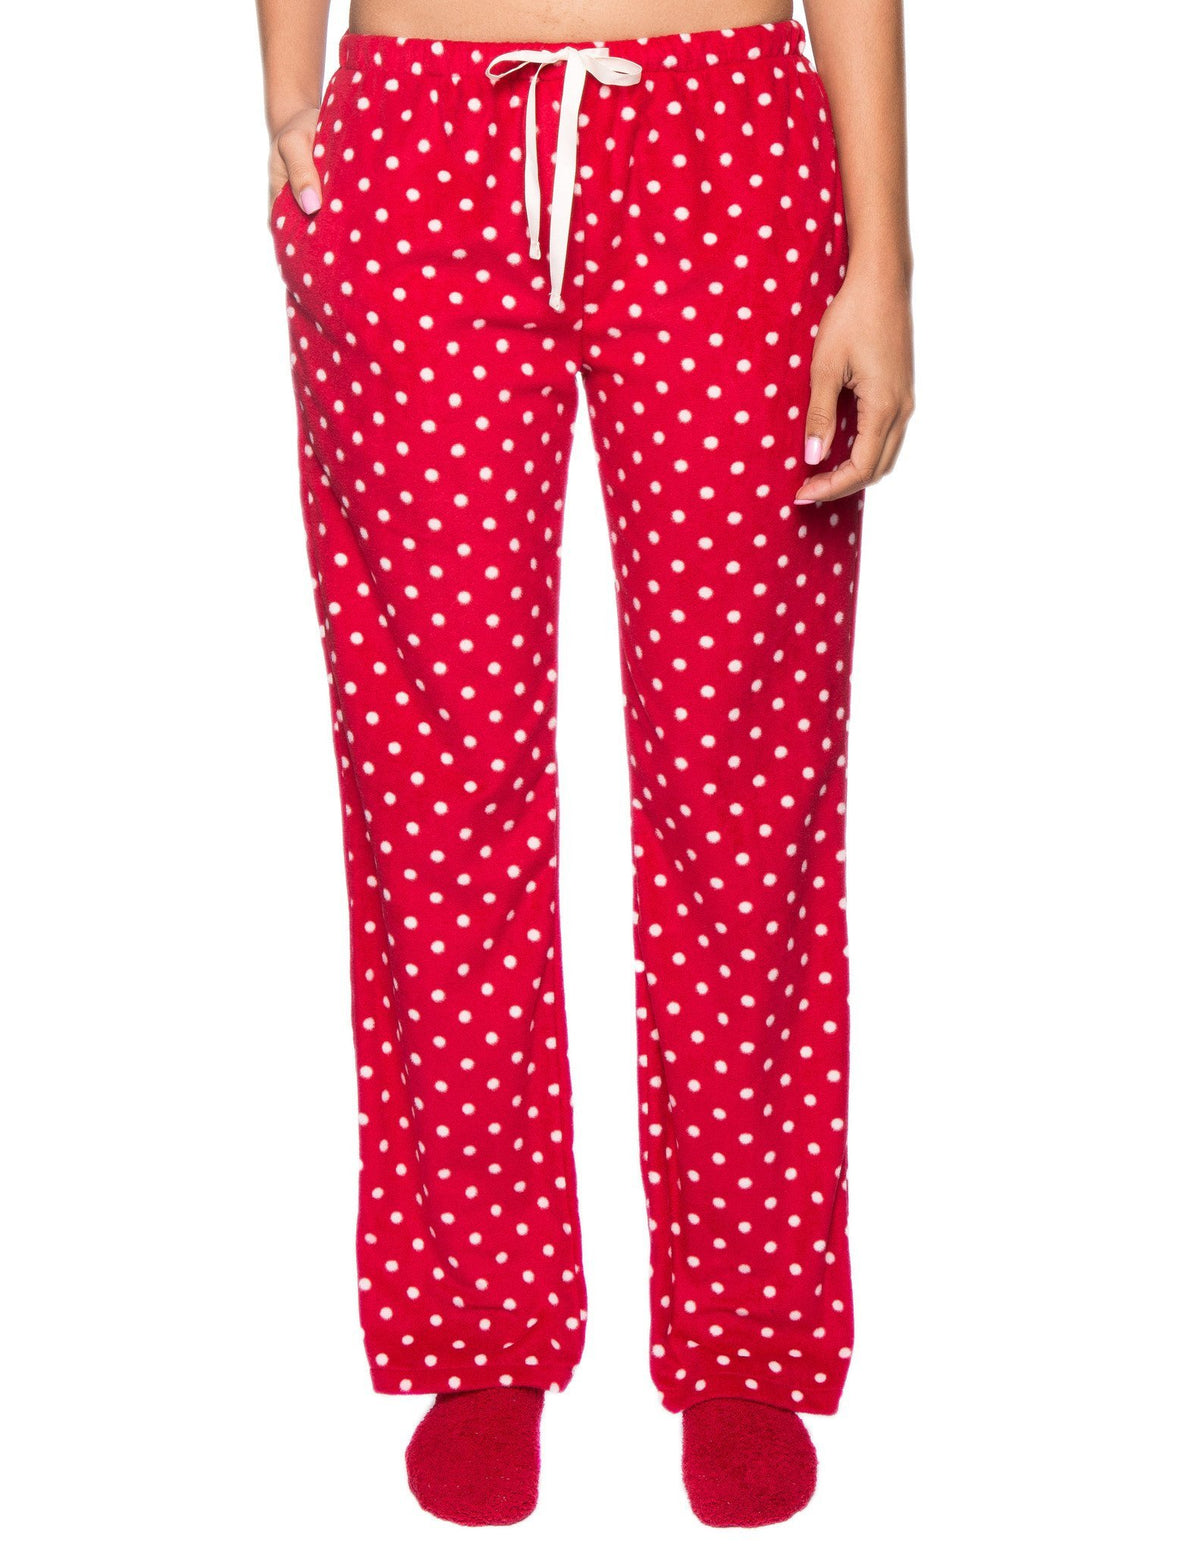 Womens Microfleece Lounge/Sleep Pants - Dots Diva Red/White